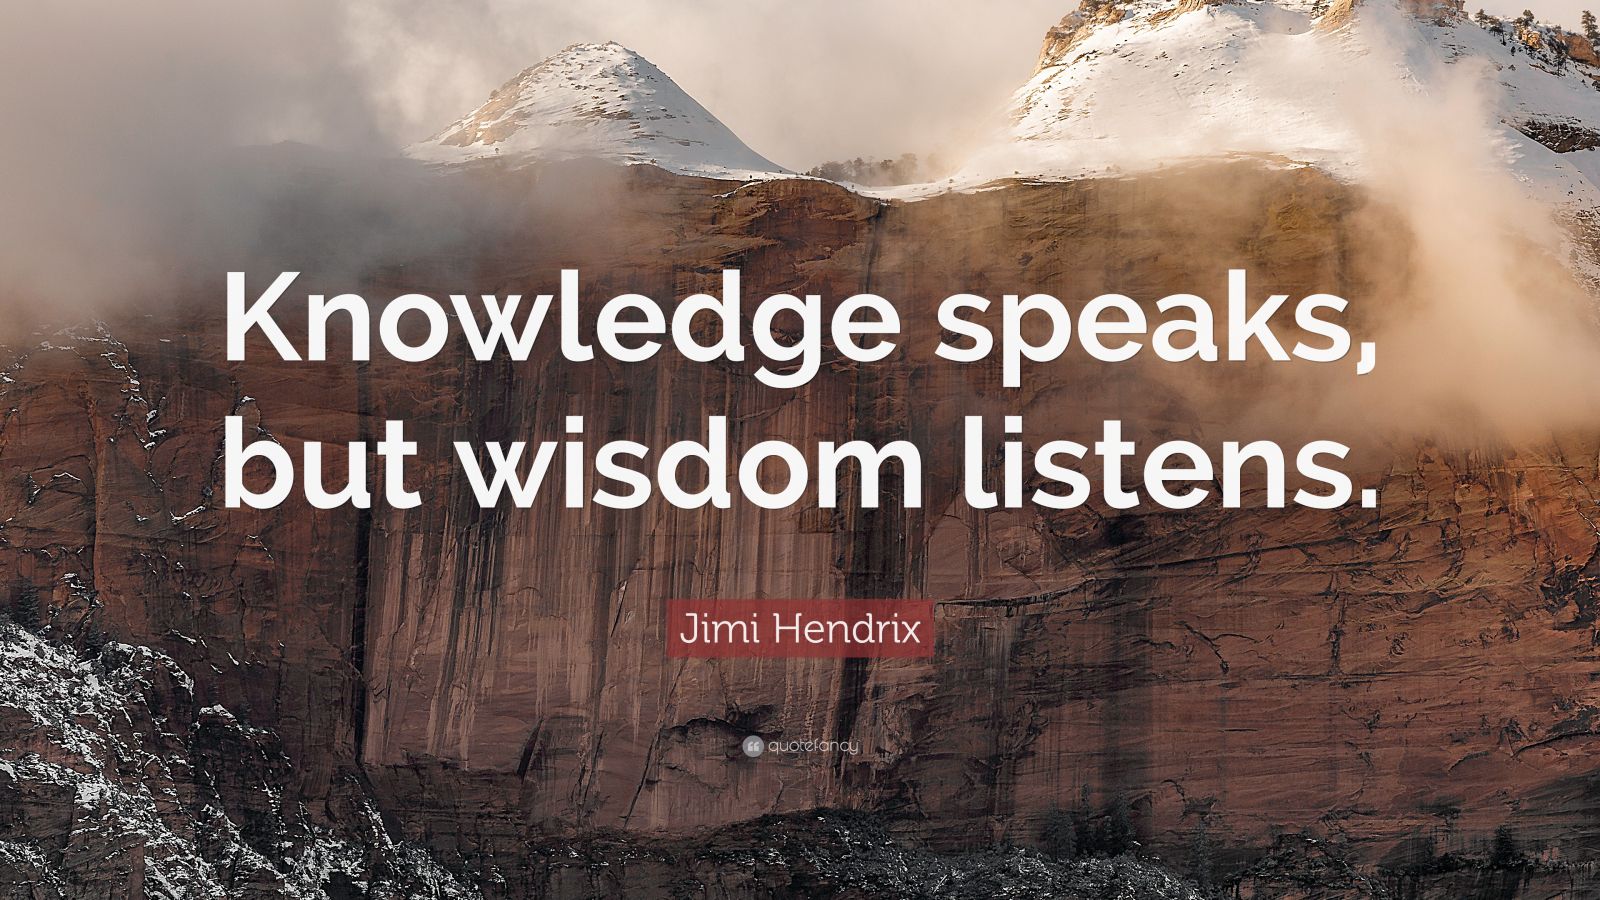 Jimi Hendrix Quote: “Knowledge speaks, but wisdom listens.” (19 wallpapers ...1600 x 900